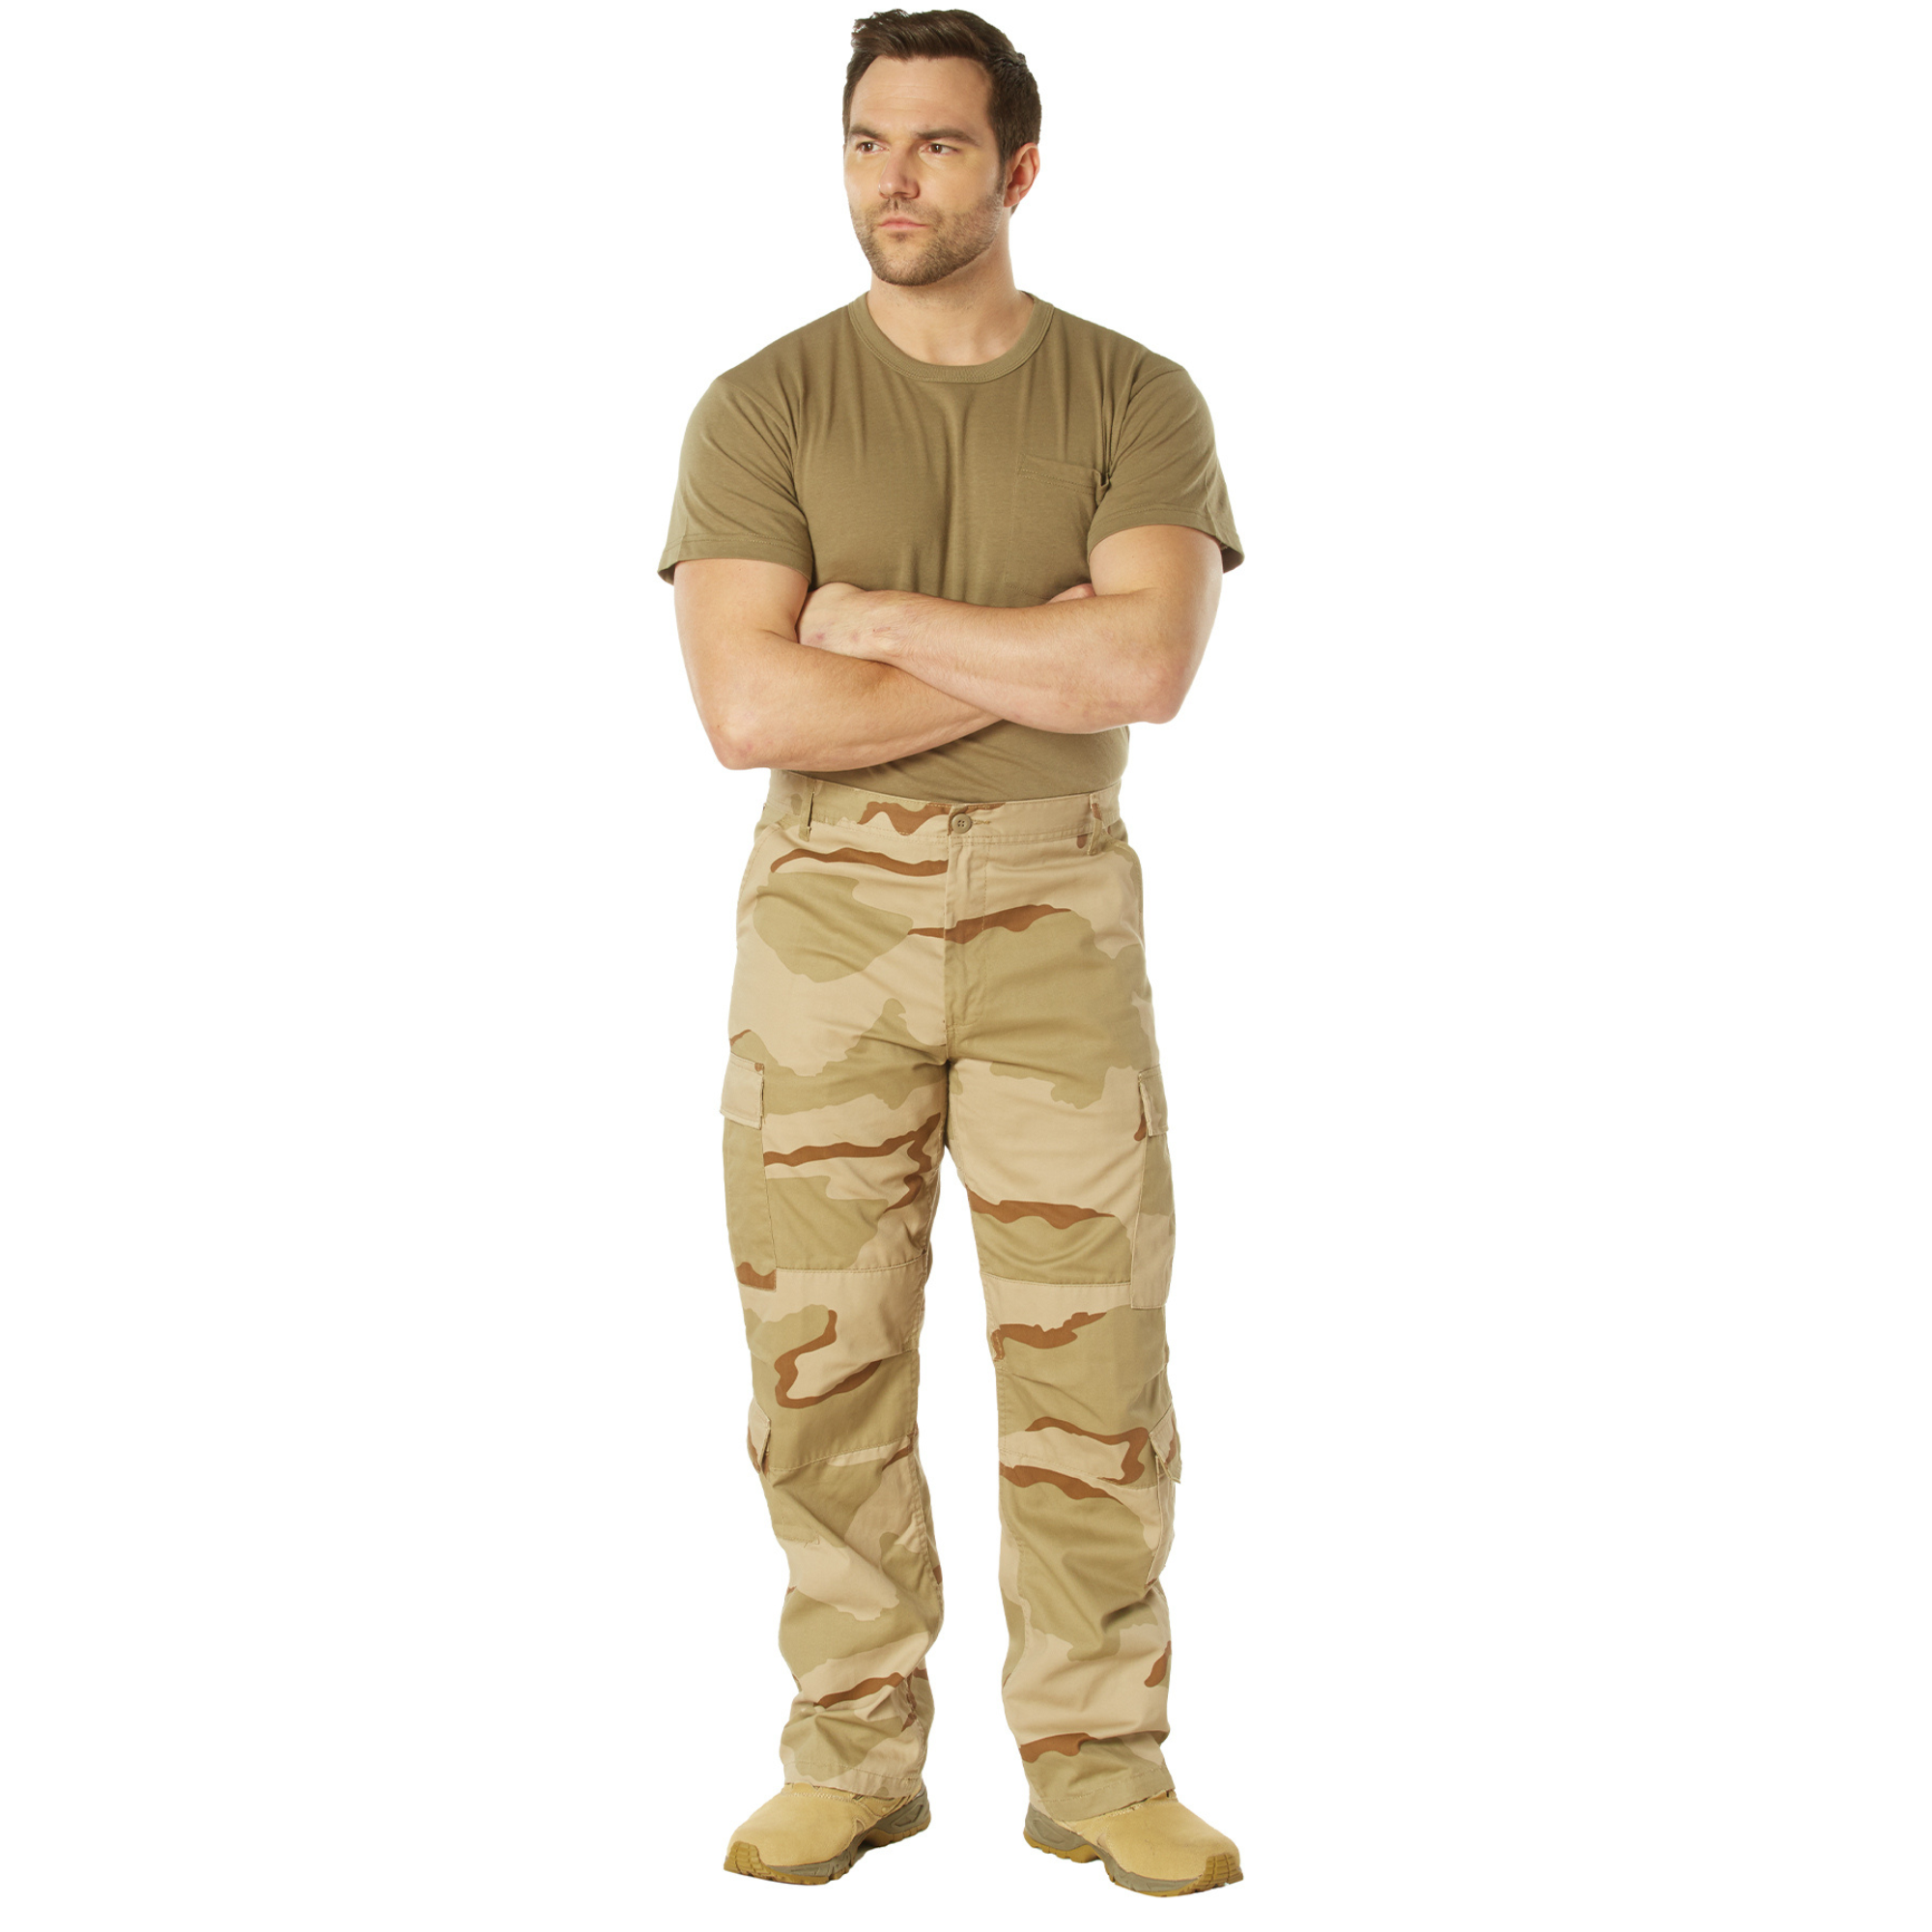 Shop Desert Digital Camouflage BDU Military Shorts - Fatigues Army